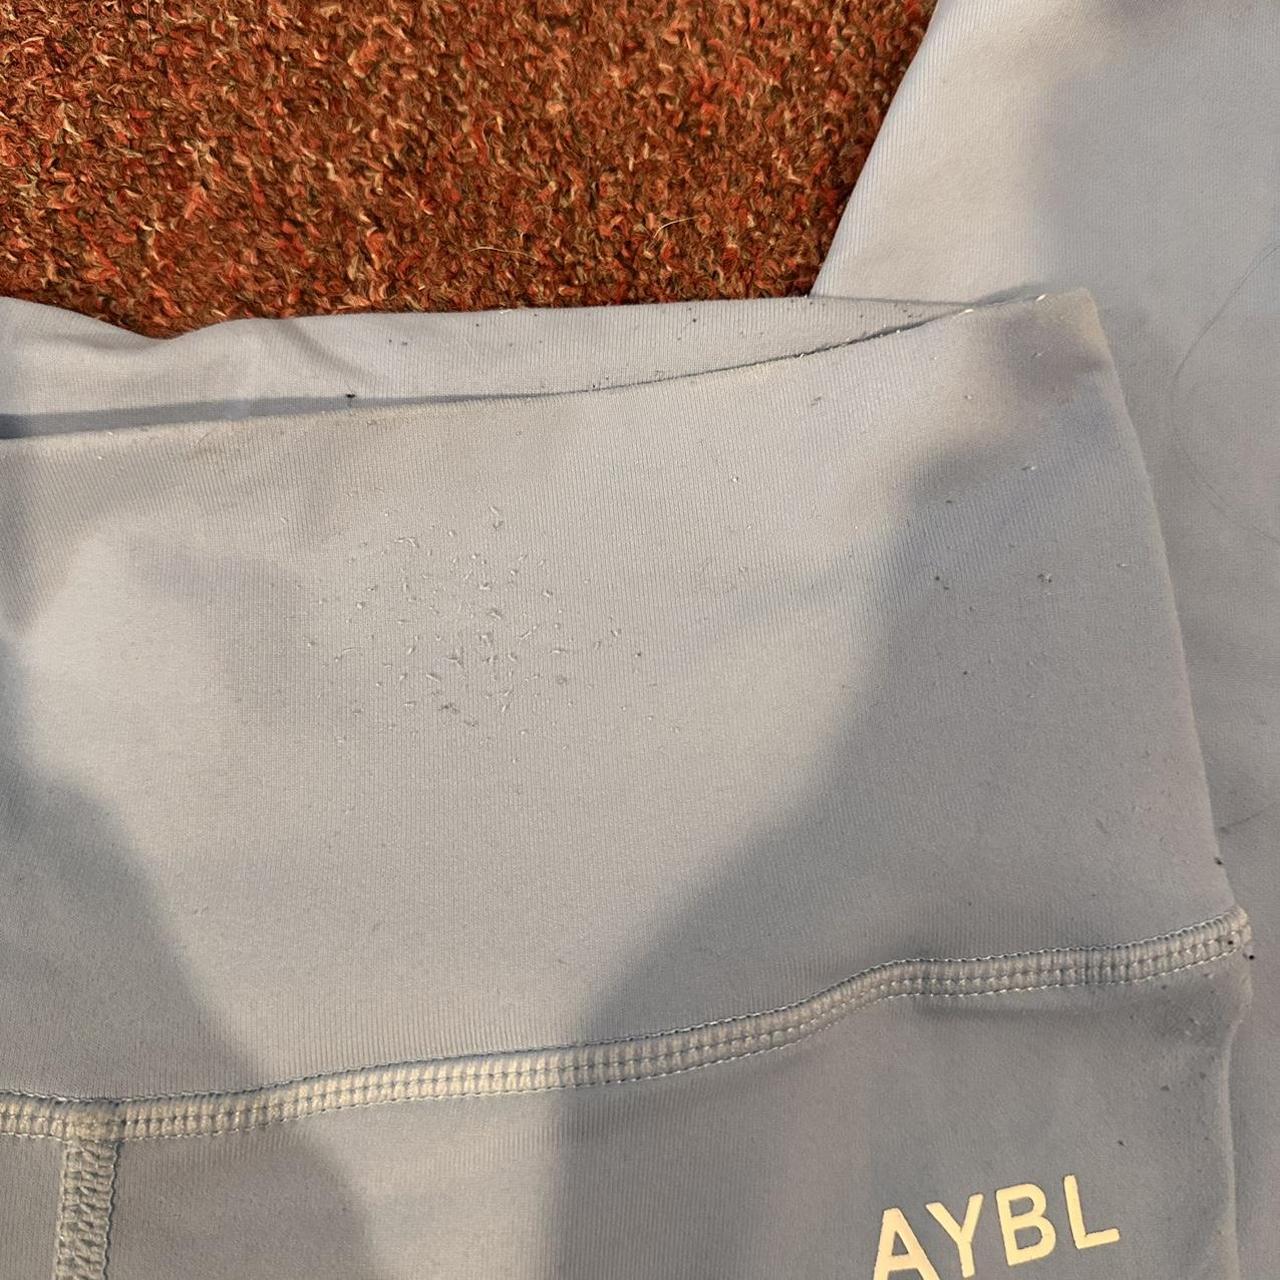 AYBL core leggings - 'asphalt grey' size XS hate to - Depop